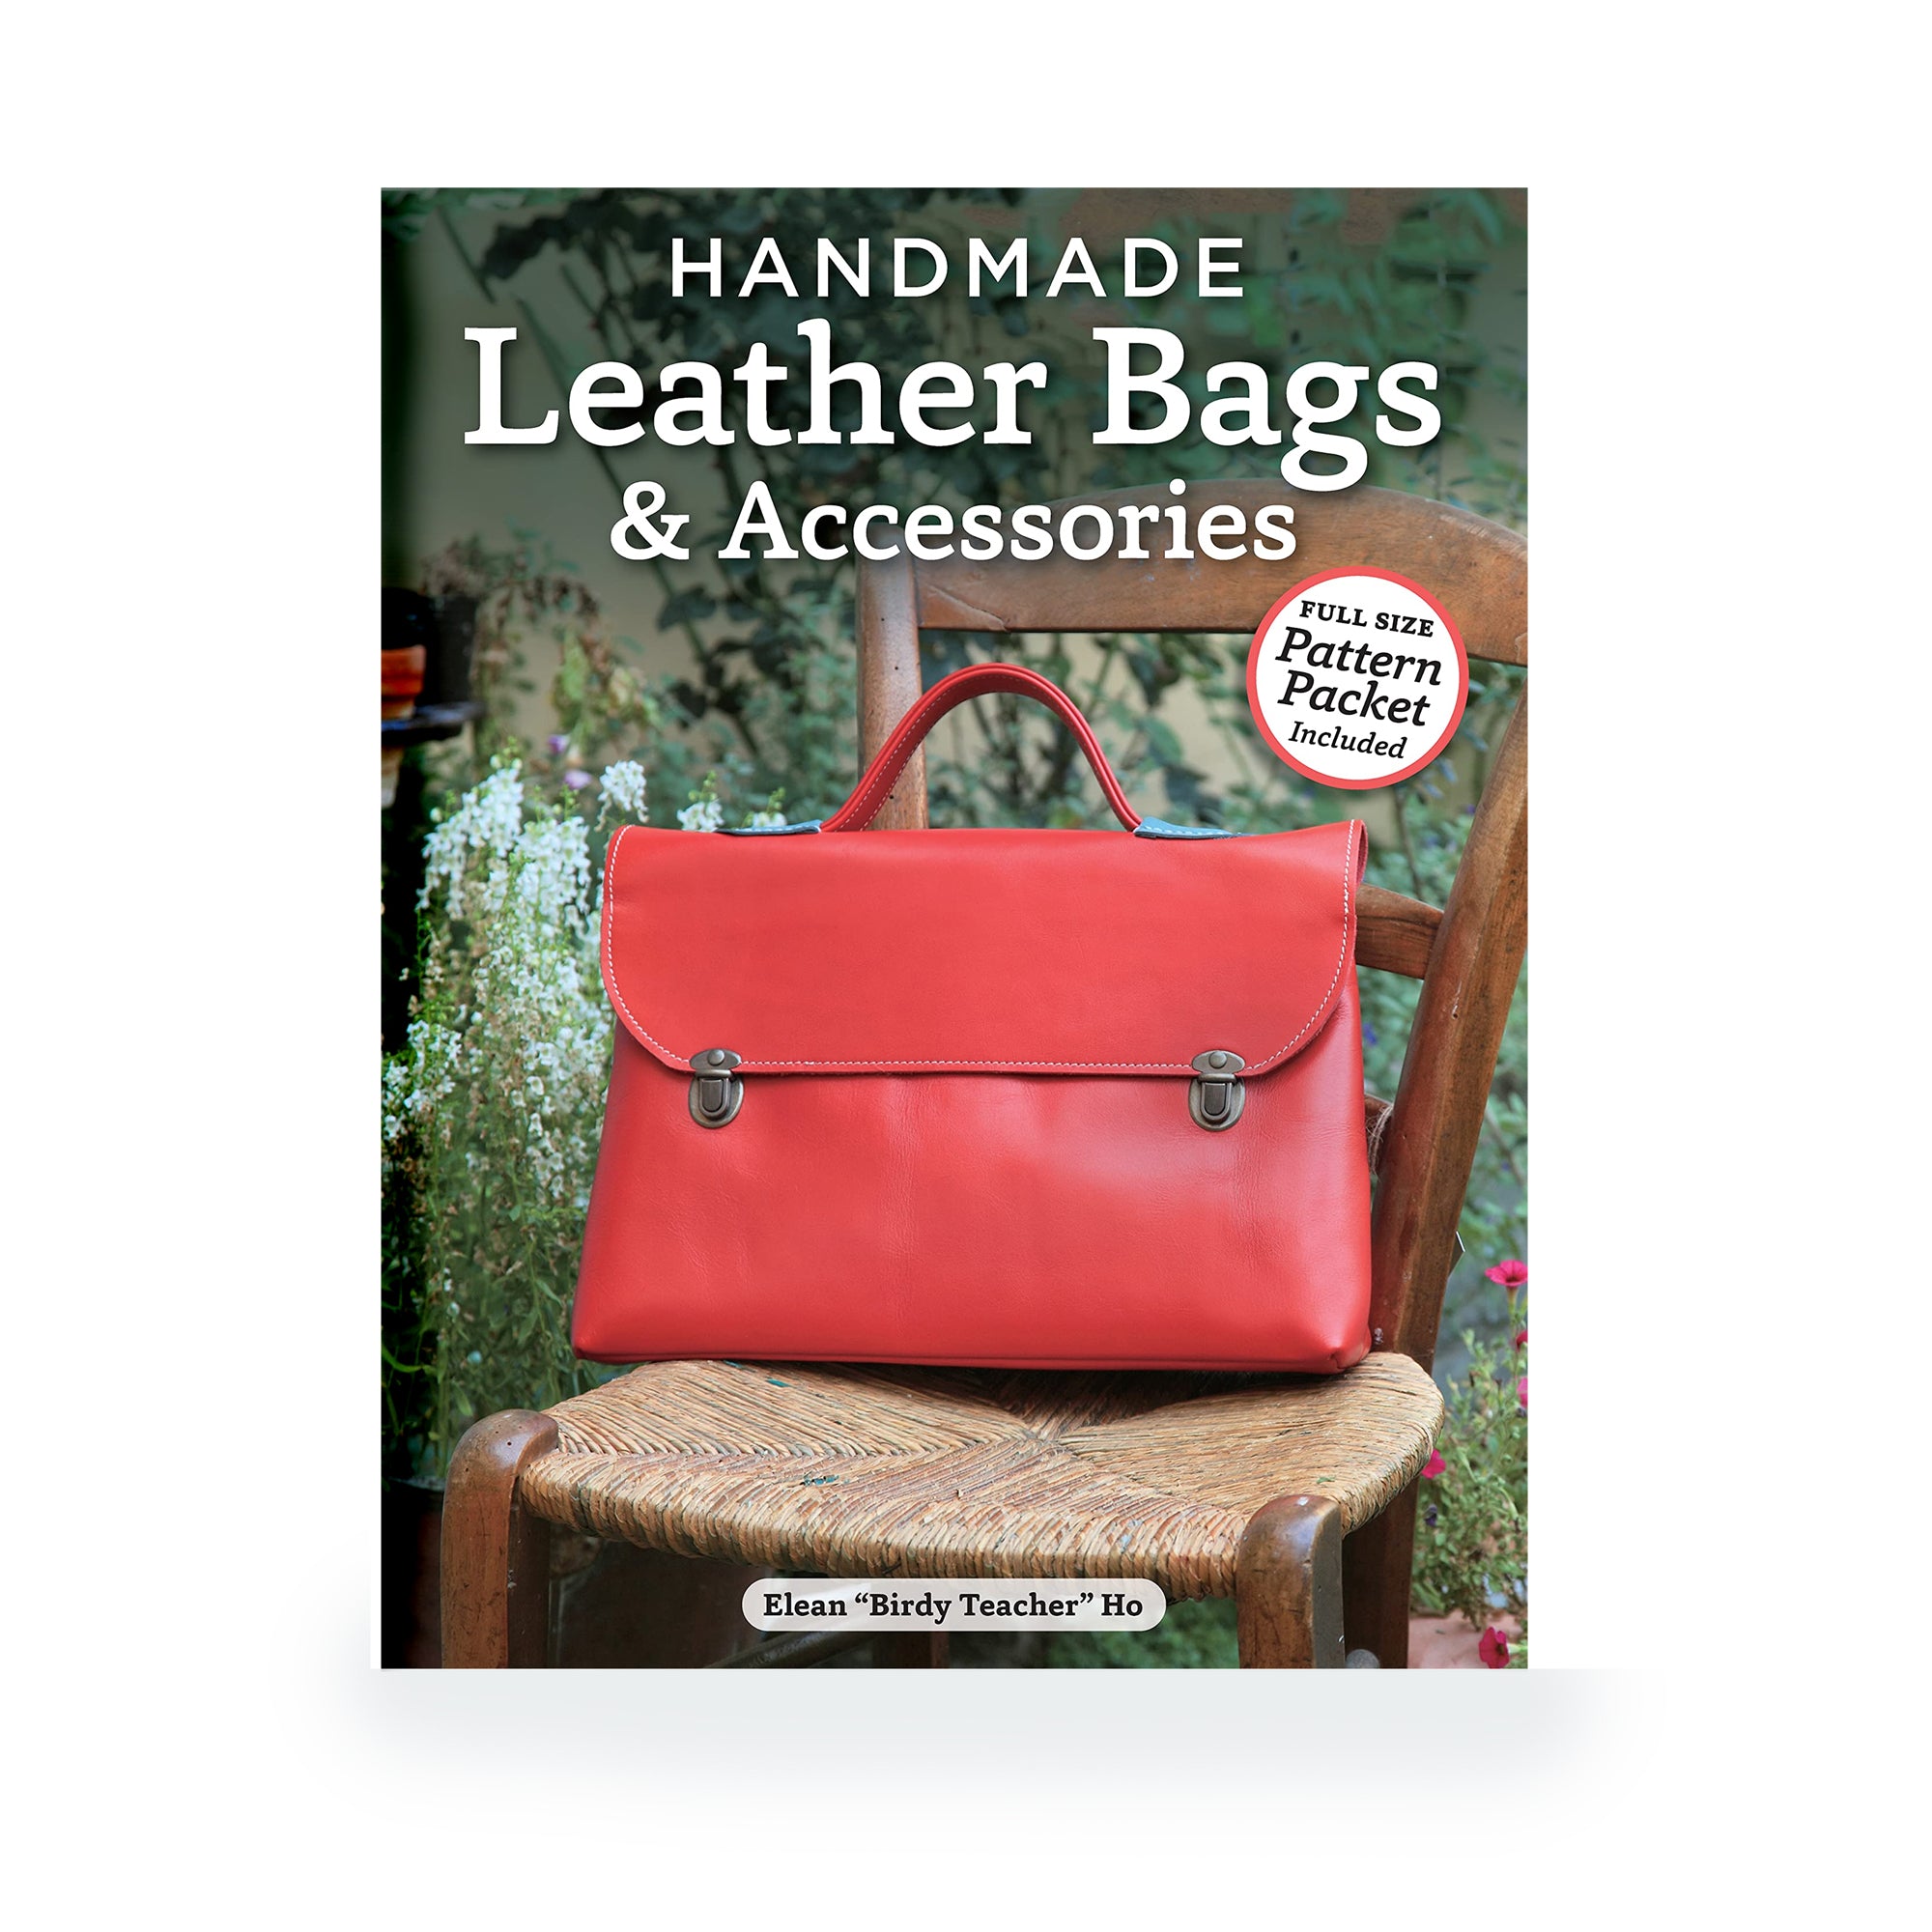 Handmade Leather Bags & Accessories by Elean "Birdy Teacher" Ho